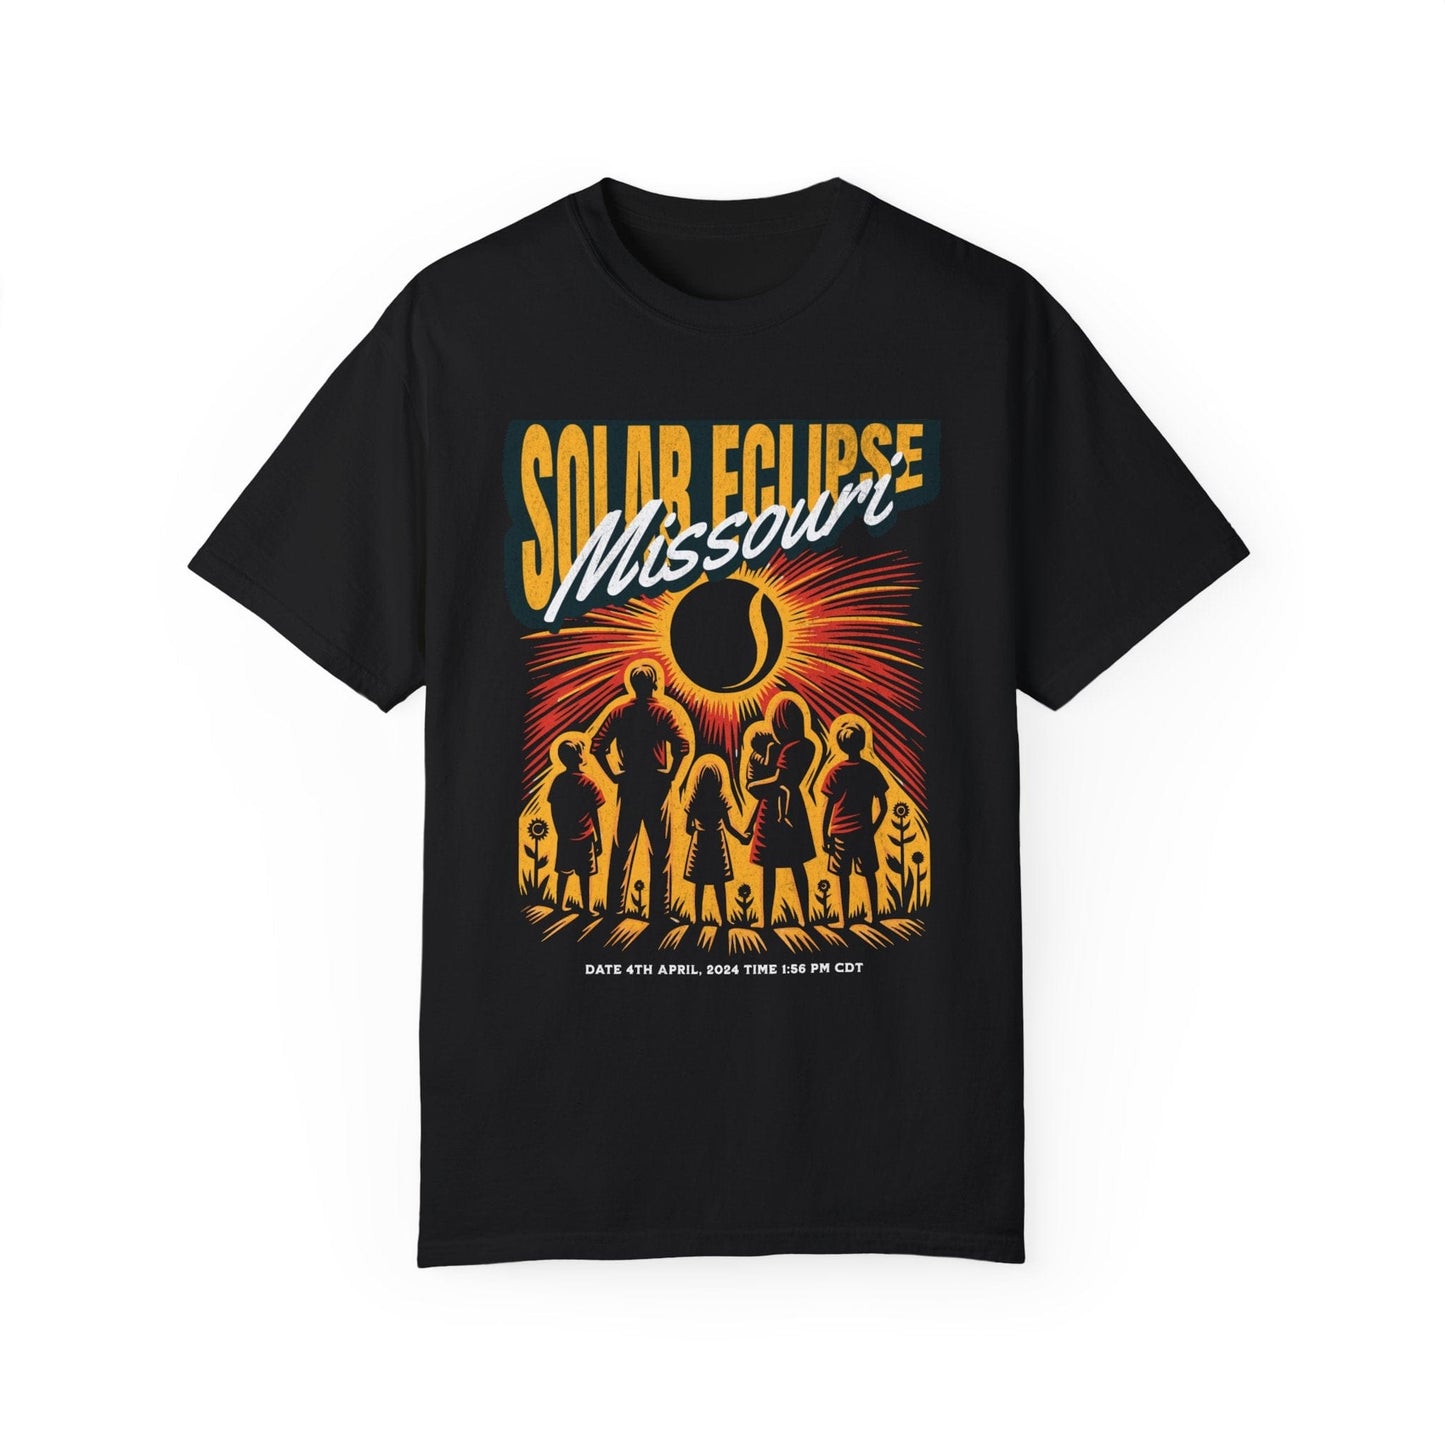 Missouri Totality Solar Eclipse 4.08.24 America Adult S-4XL - Black/Graphite